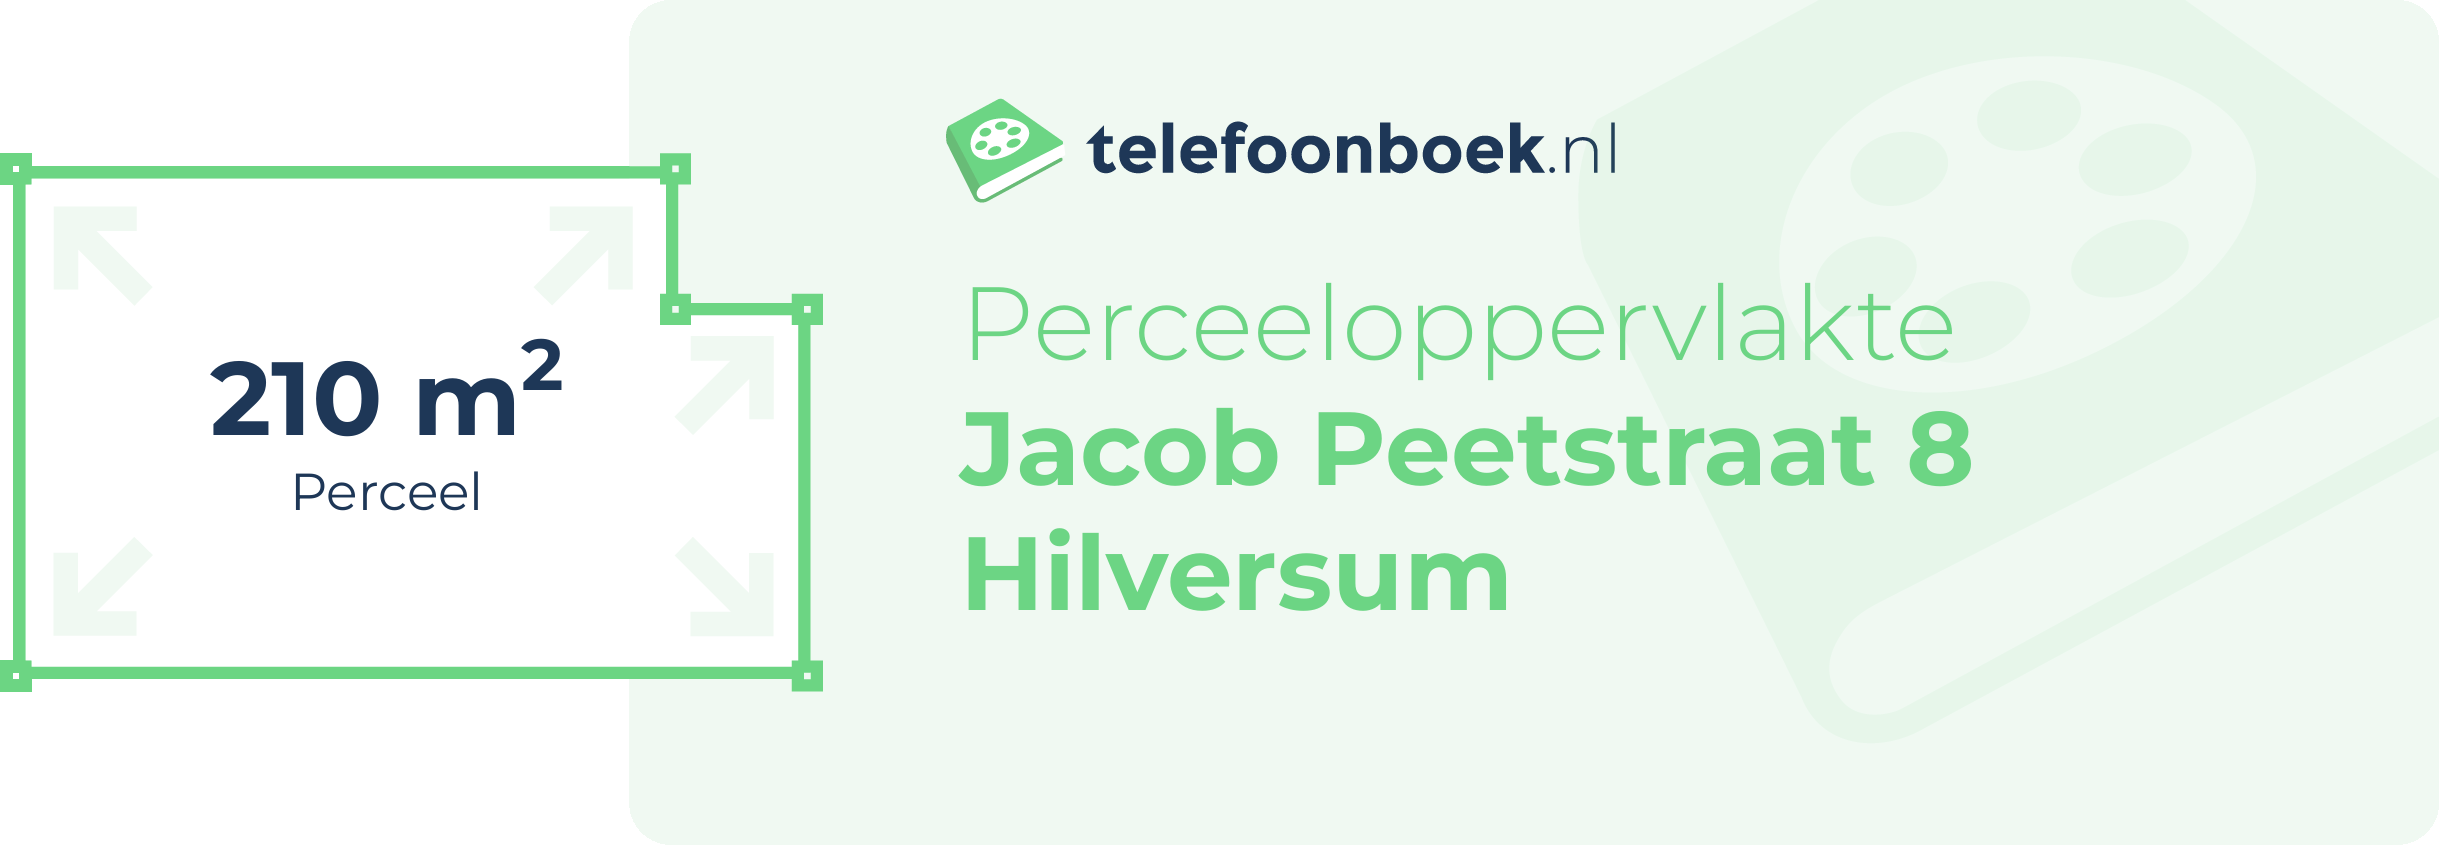 Perceeloppervlakte Jacob Peetstraat 8 Hilversum